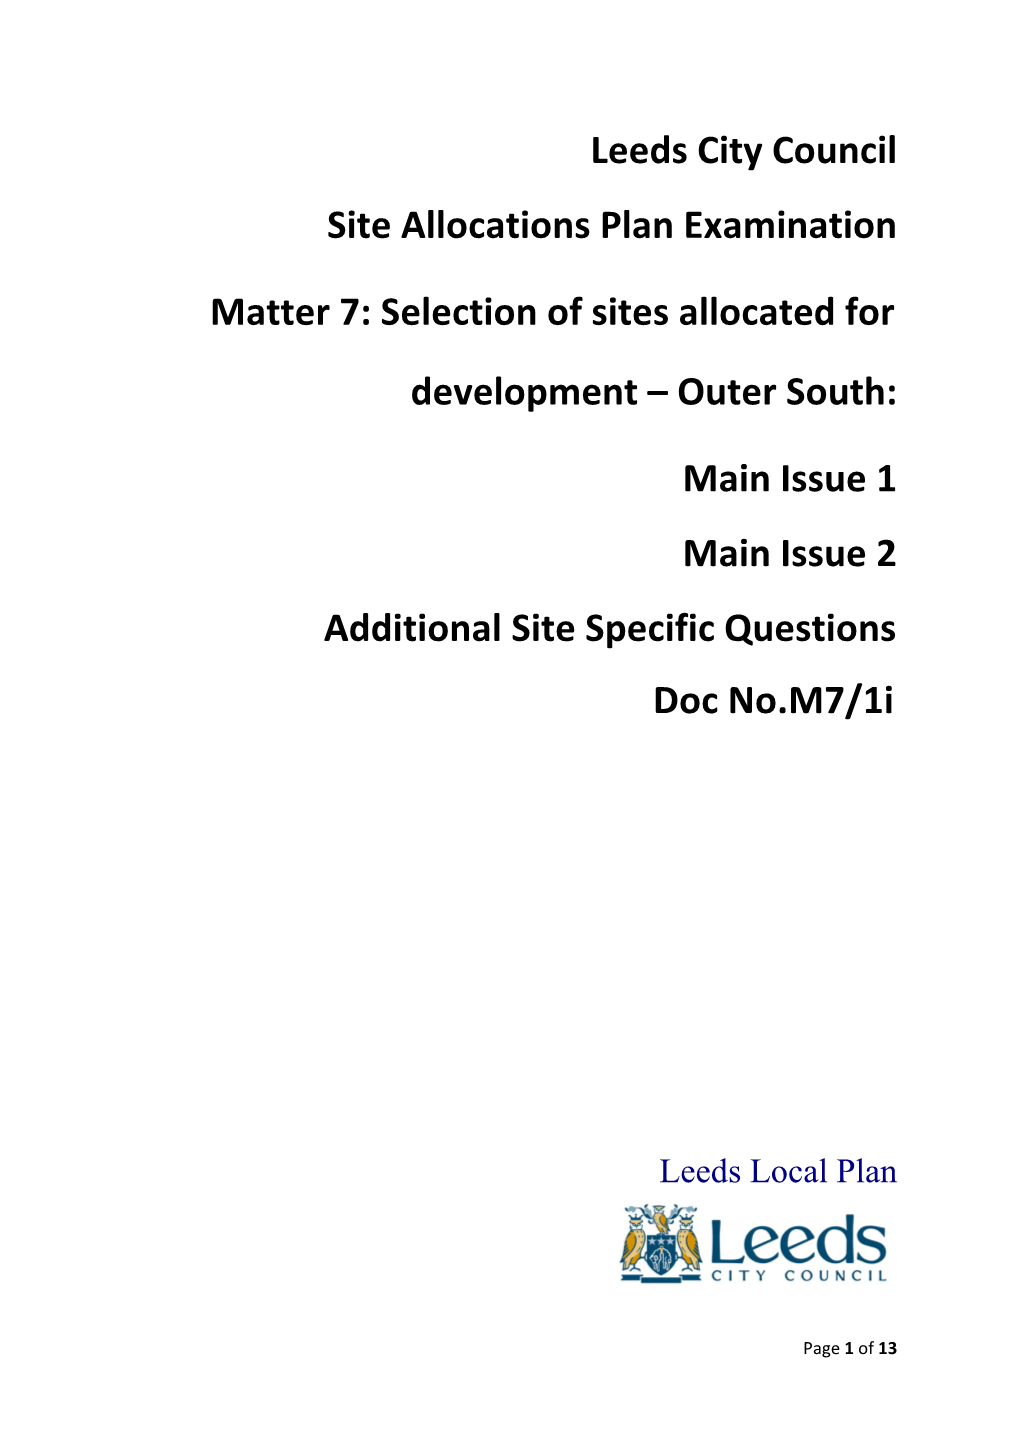 Leeds City Council Site Allocations Plan Examination Matter 7